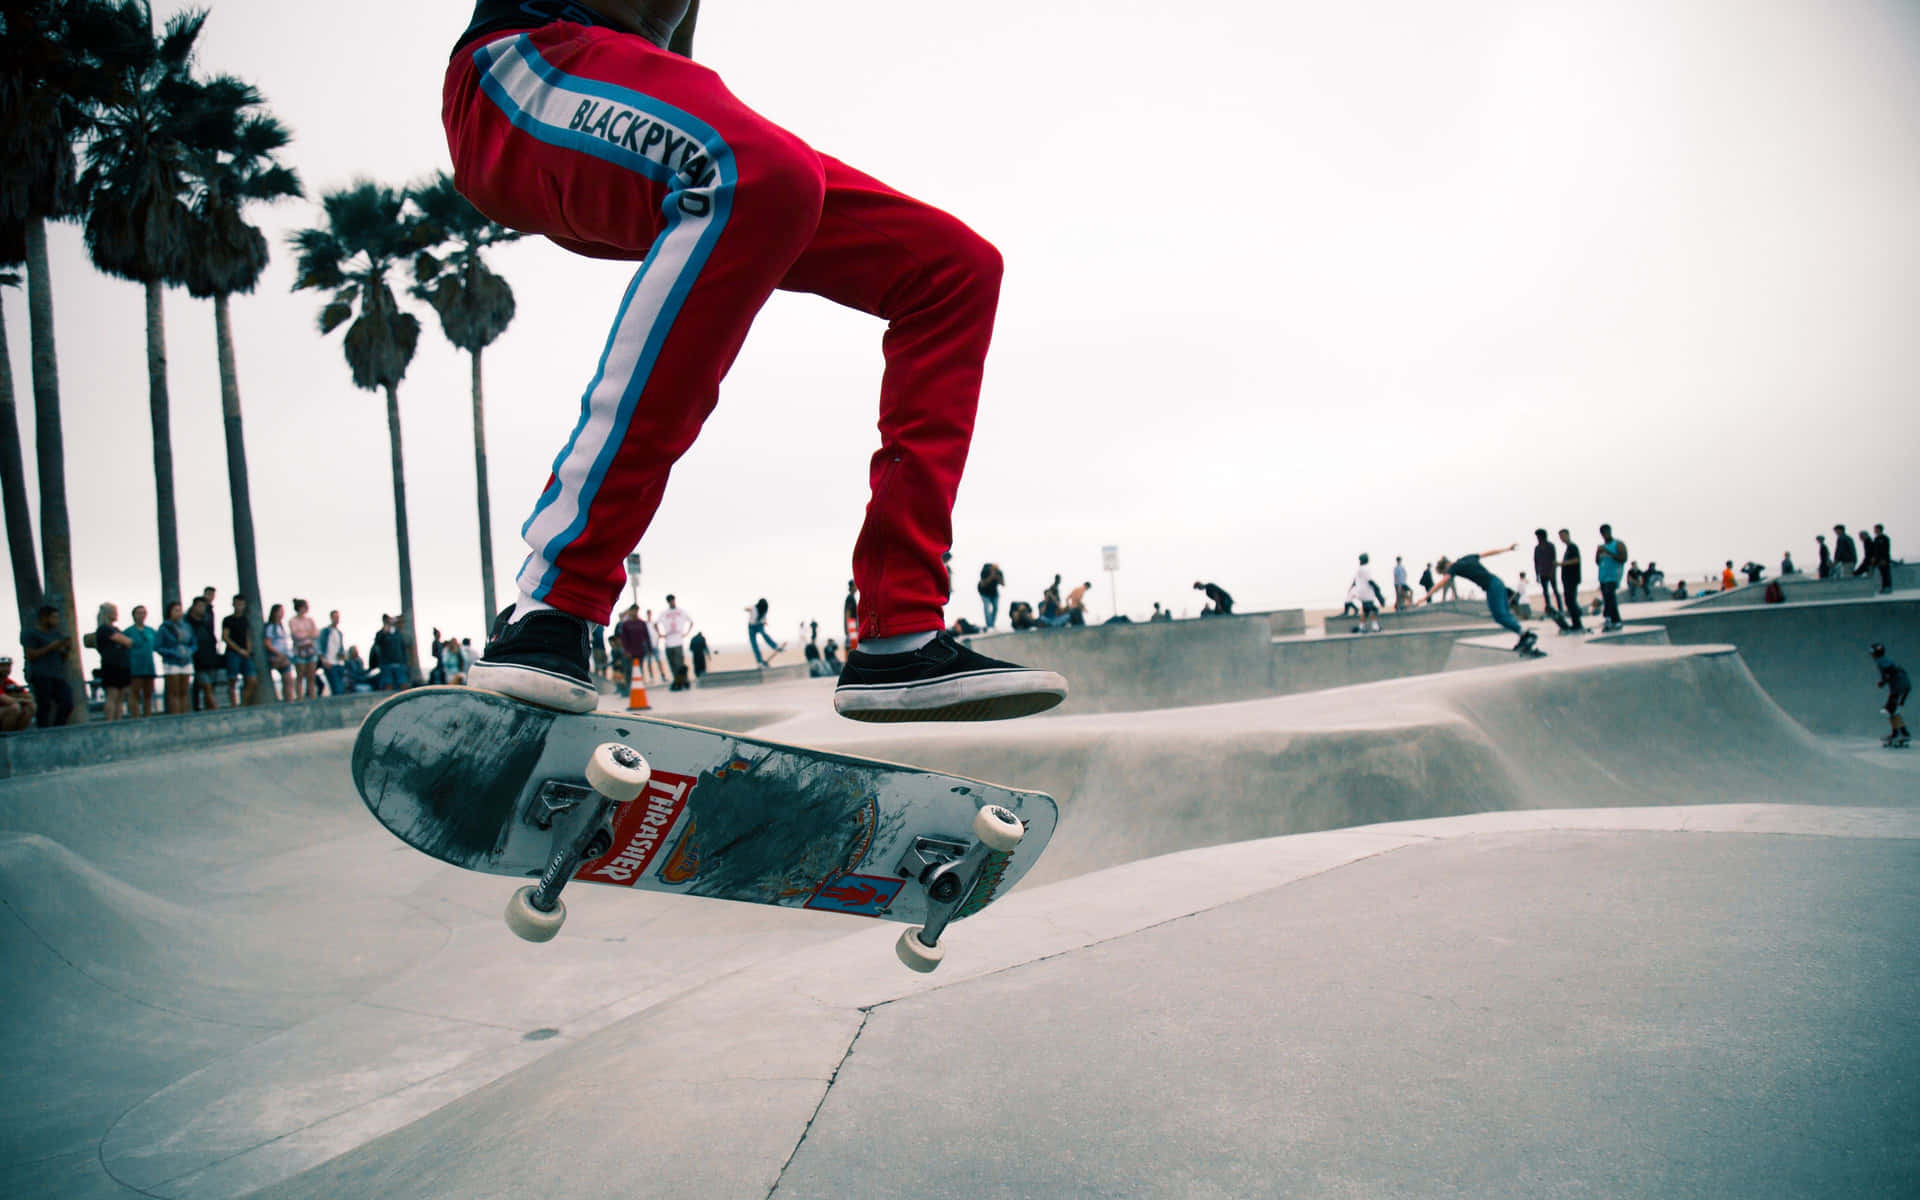 Skater performs a daring trick Wallpaper